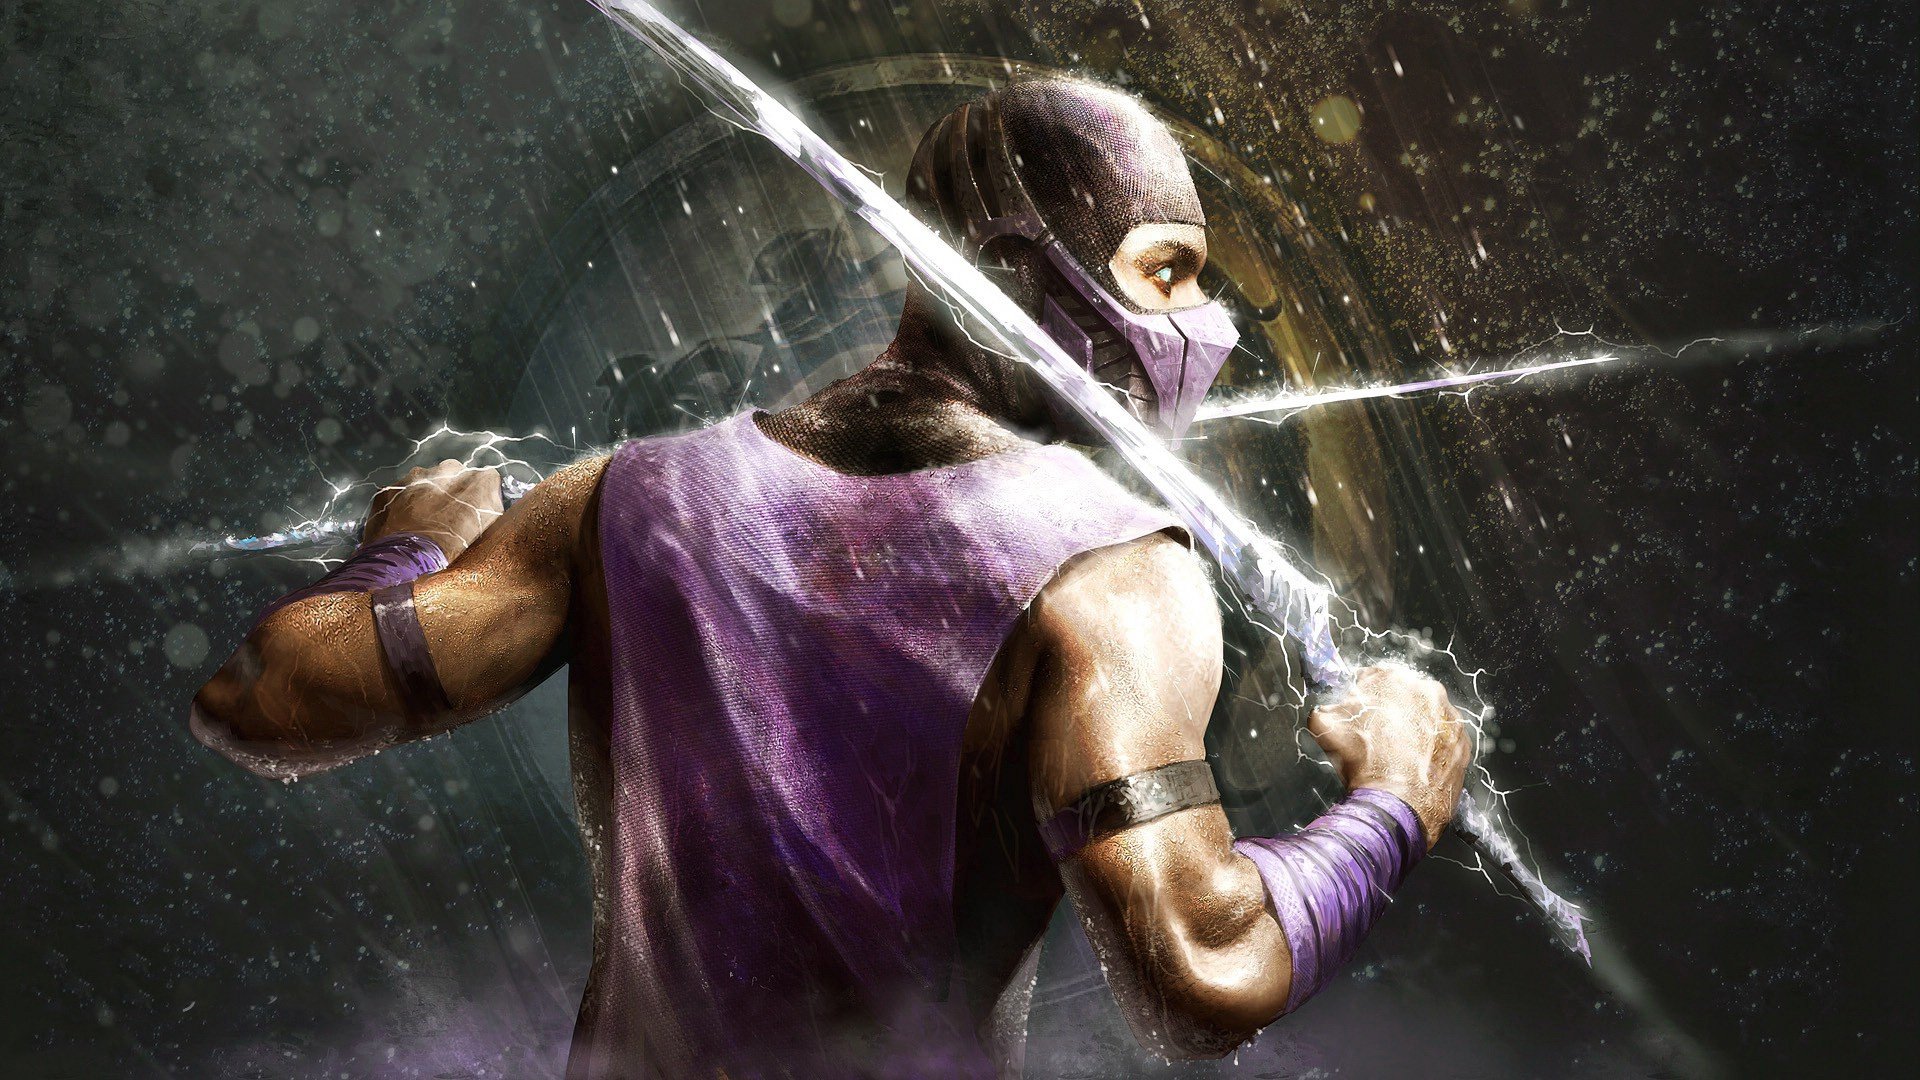 Download Rain In Mortal Kombat HD Wallpapers 5617 Full Size